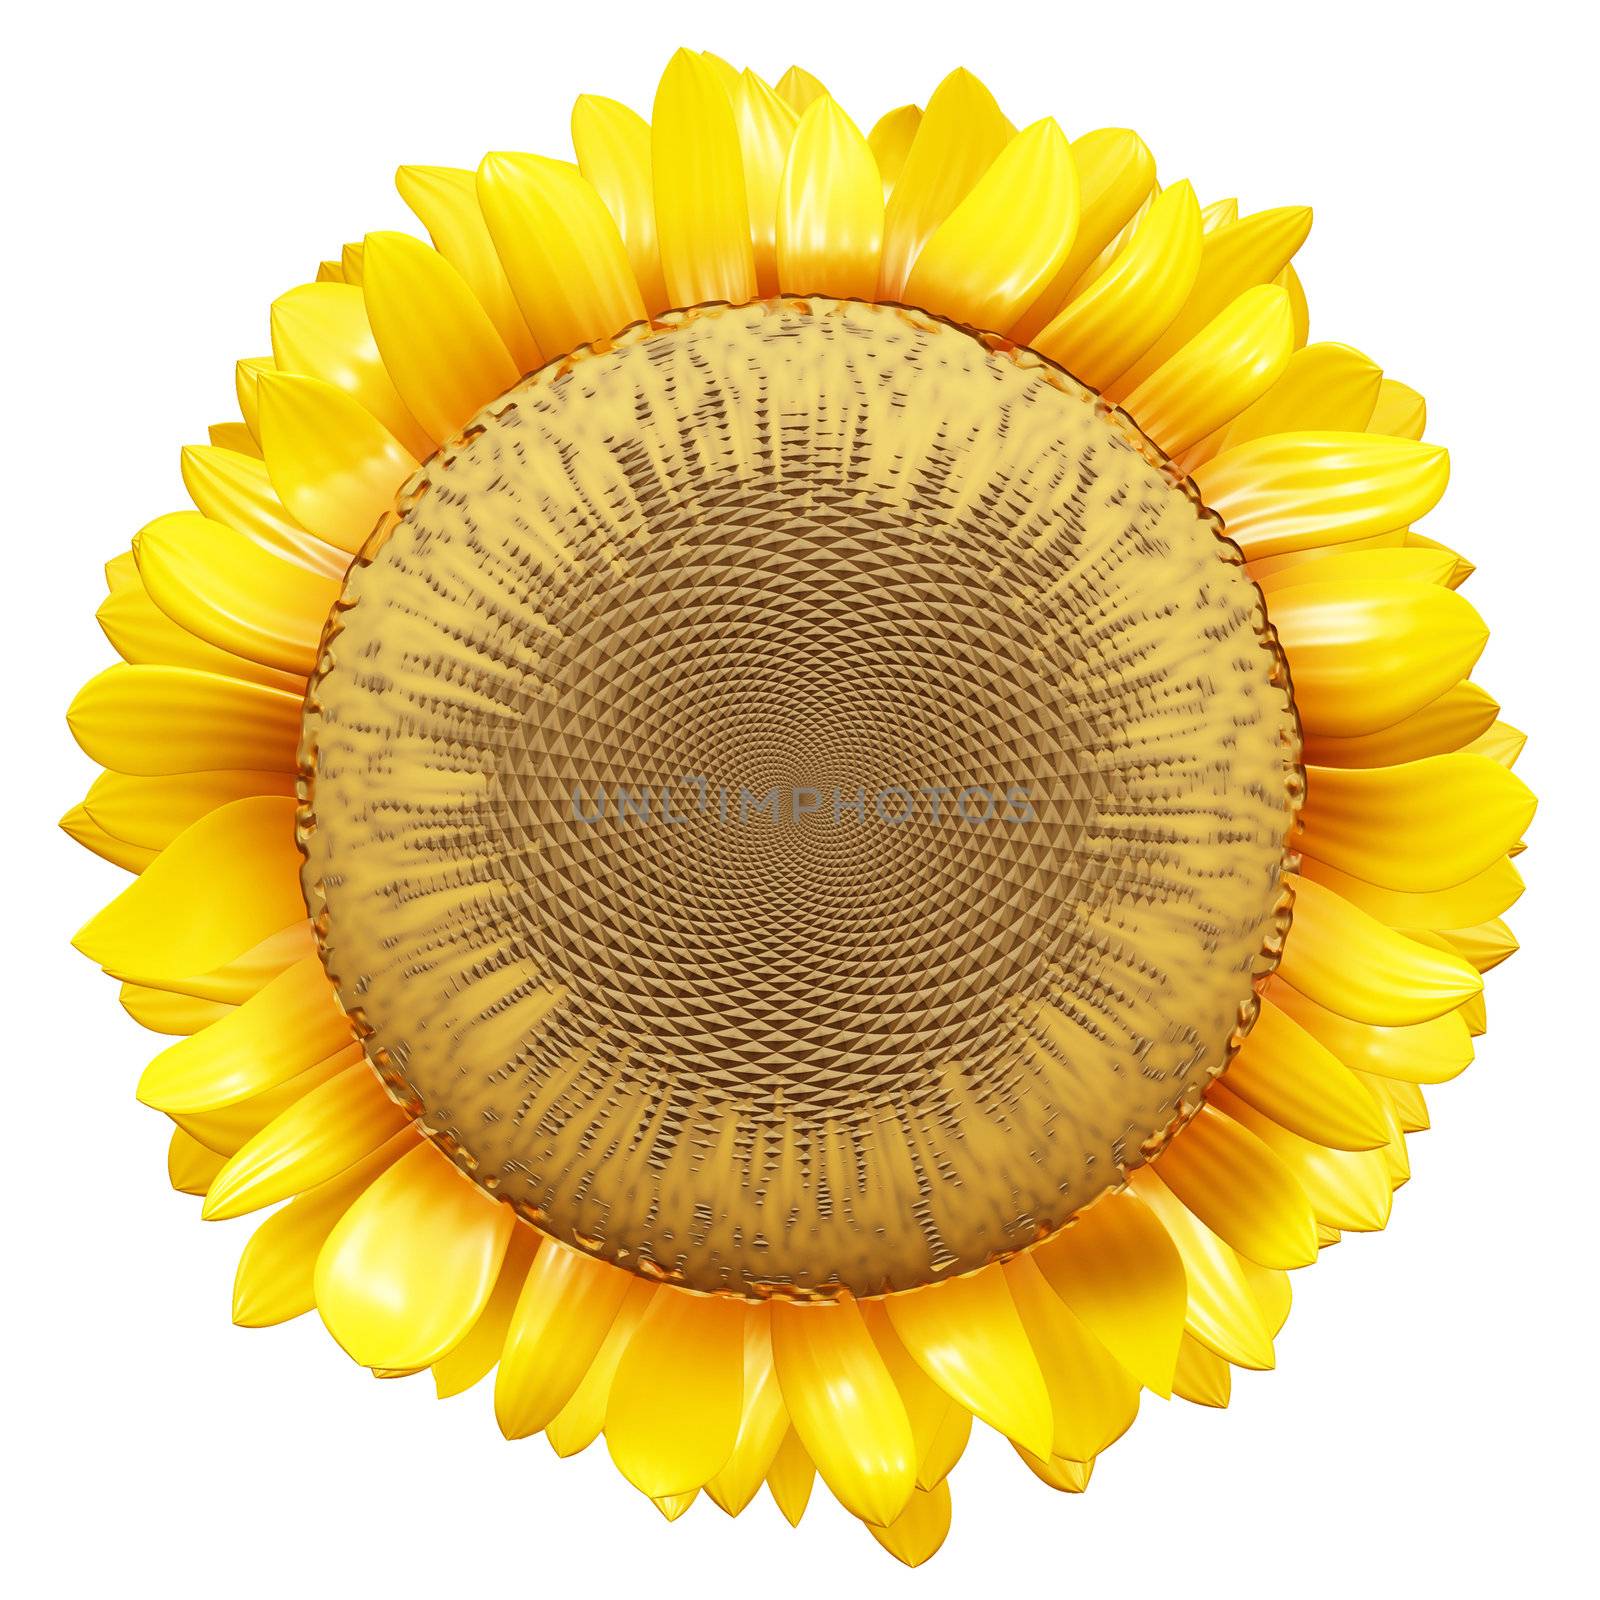 Sunflower by kentoh